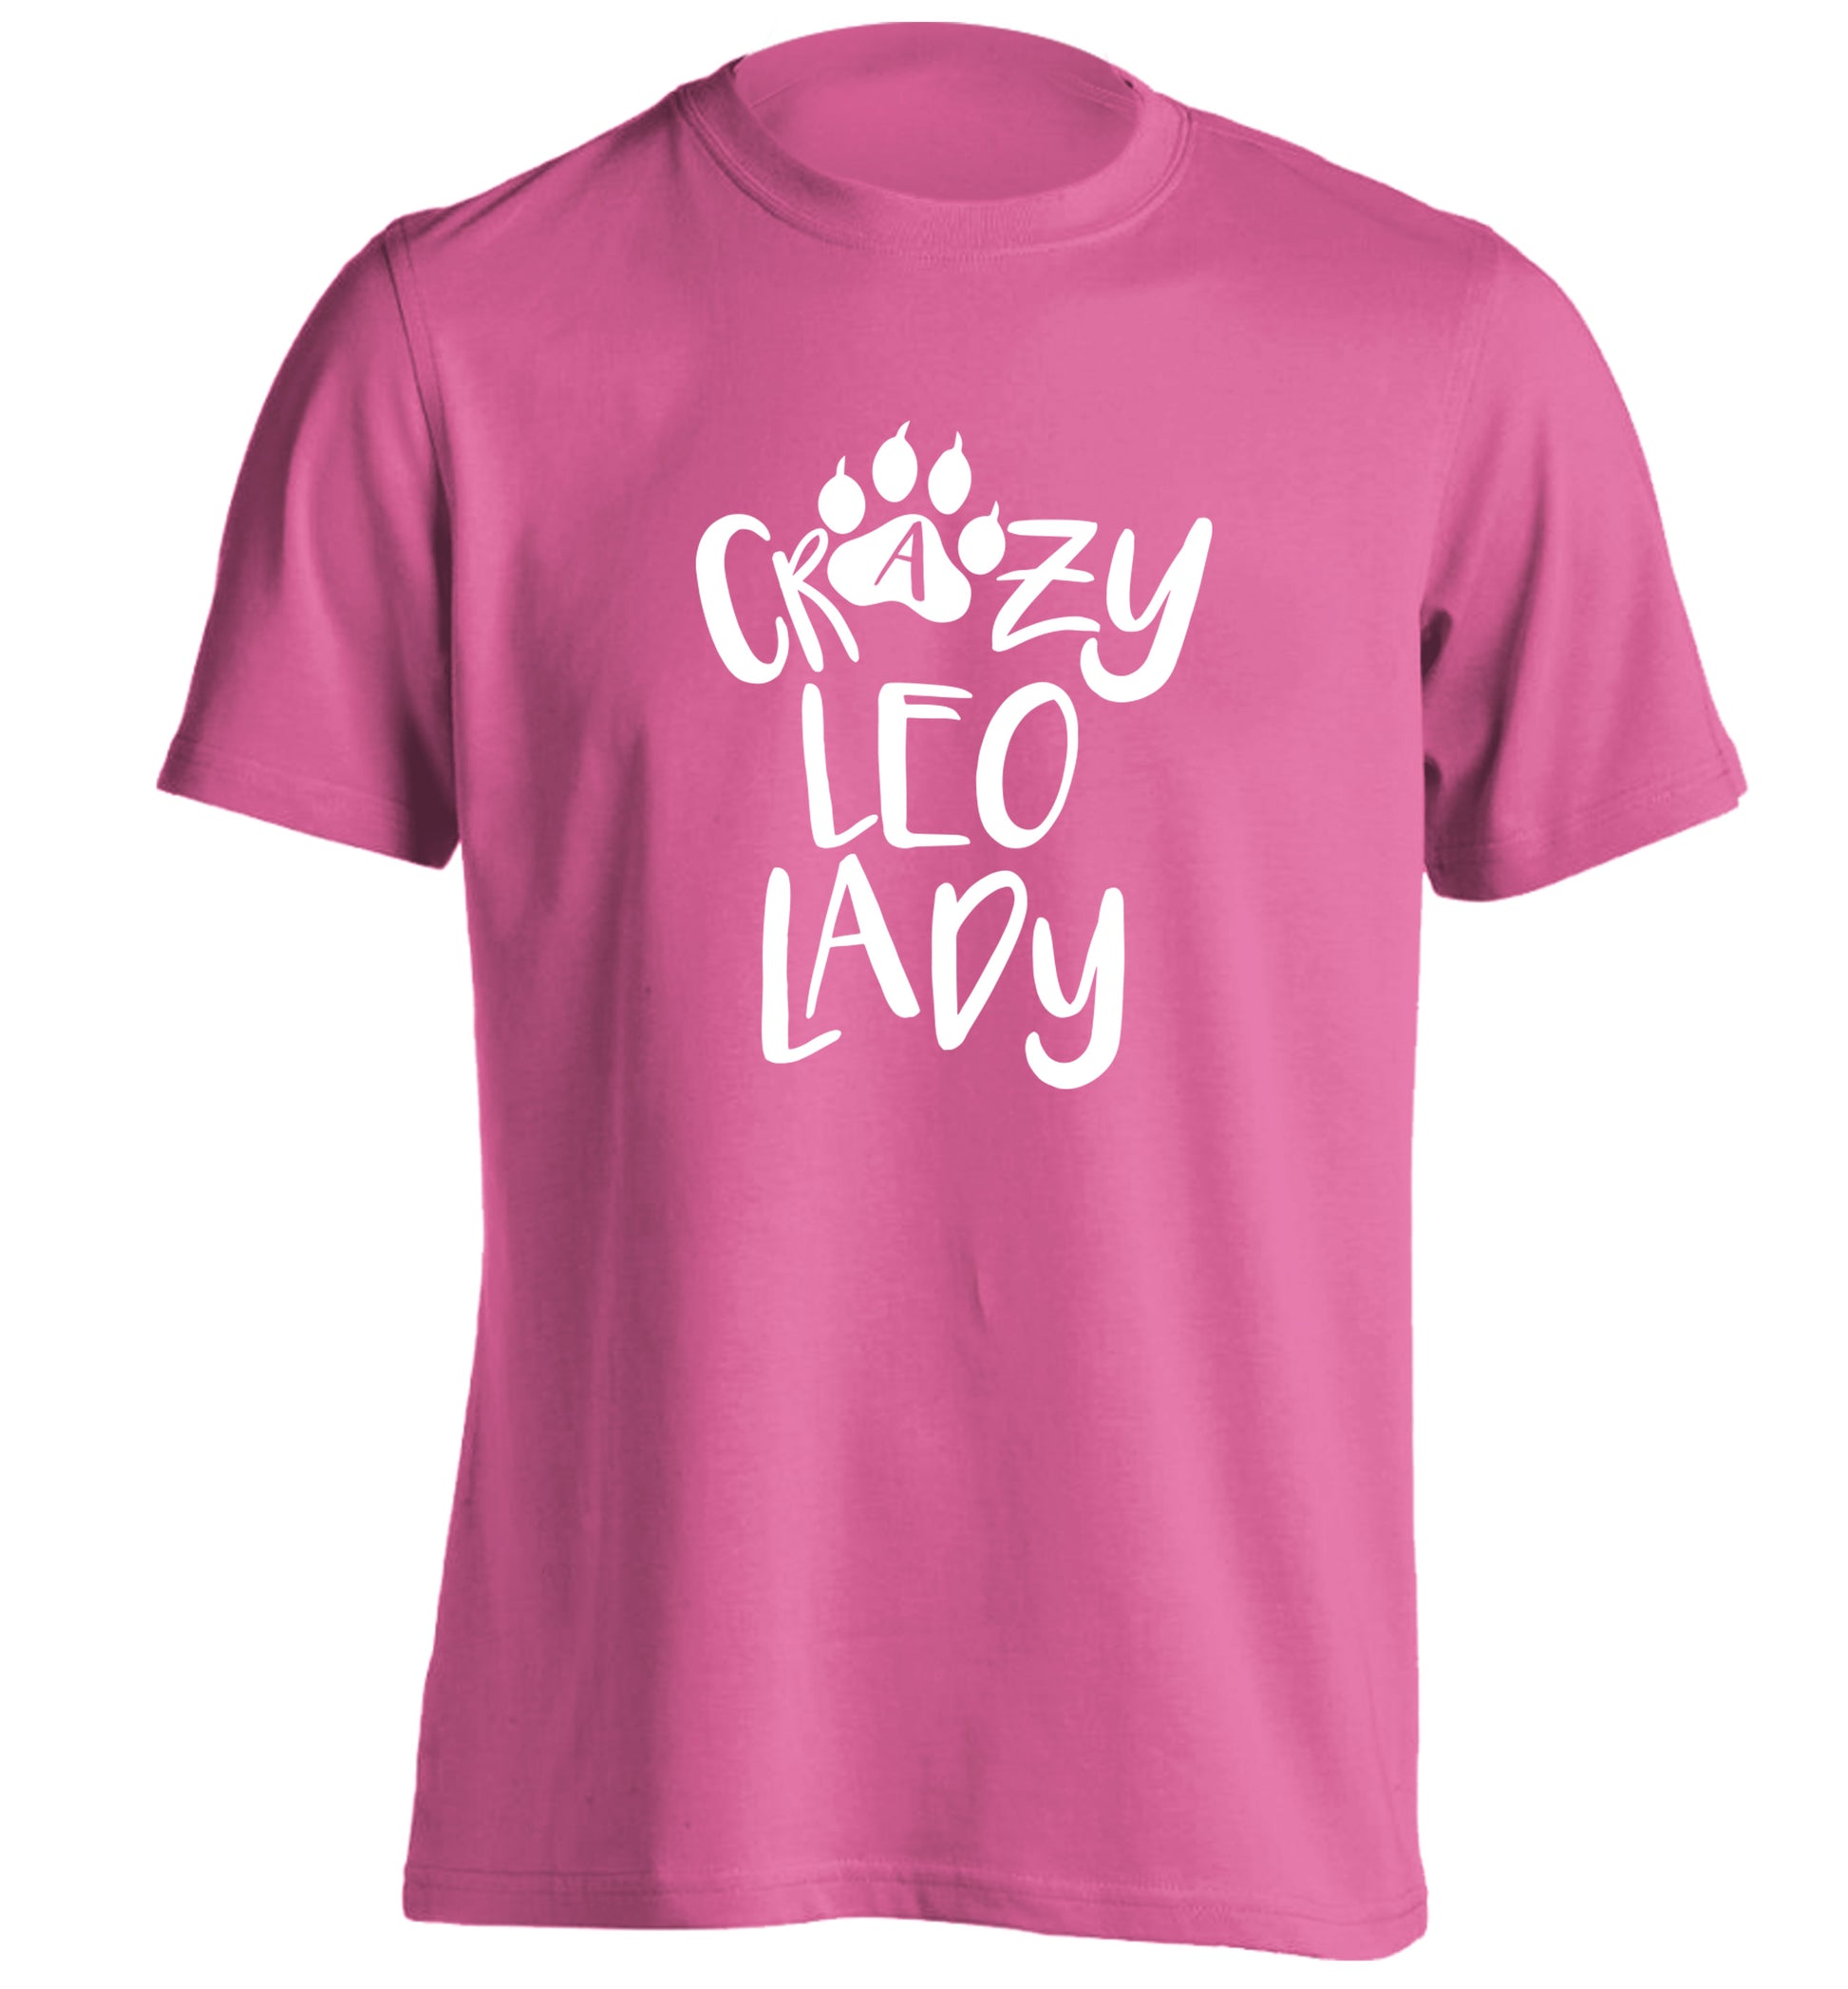 Crazy leo lady adults unisex pink Tshirt 2XL